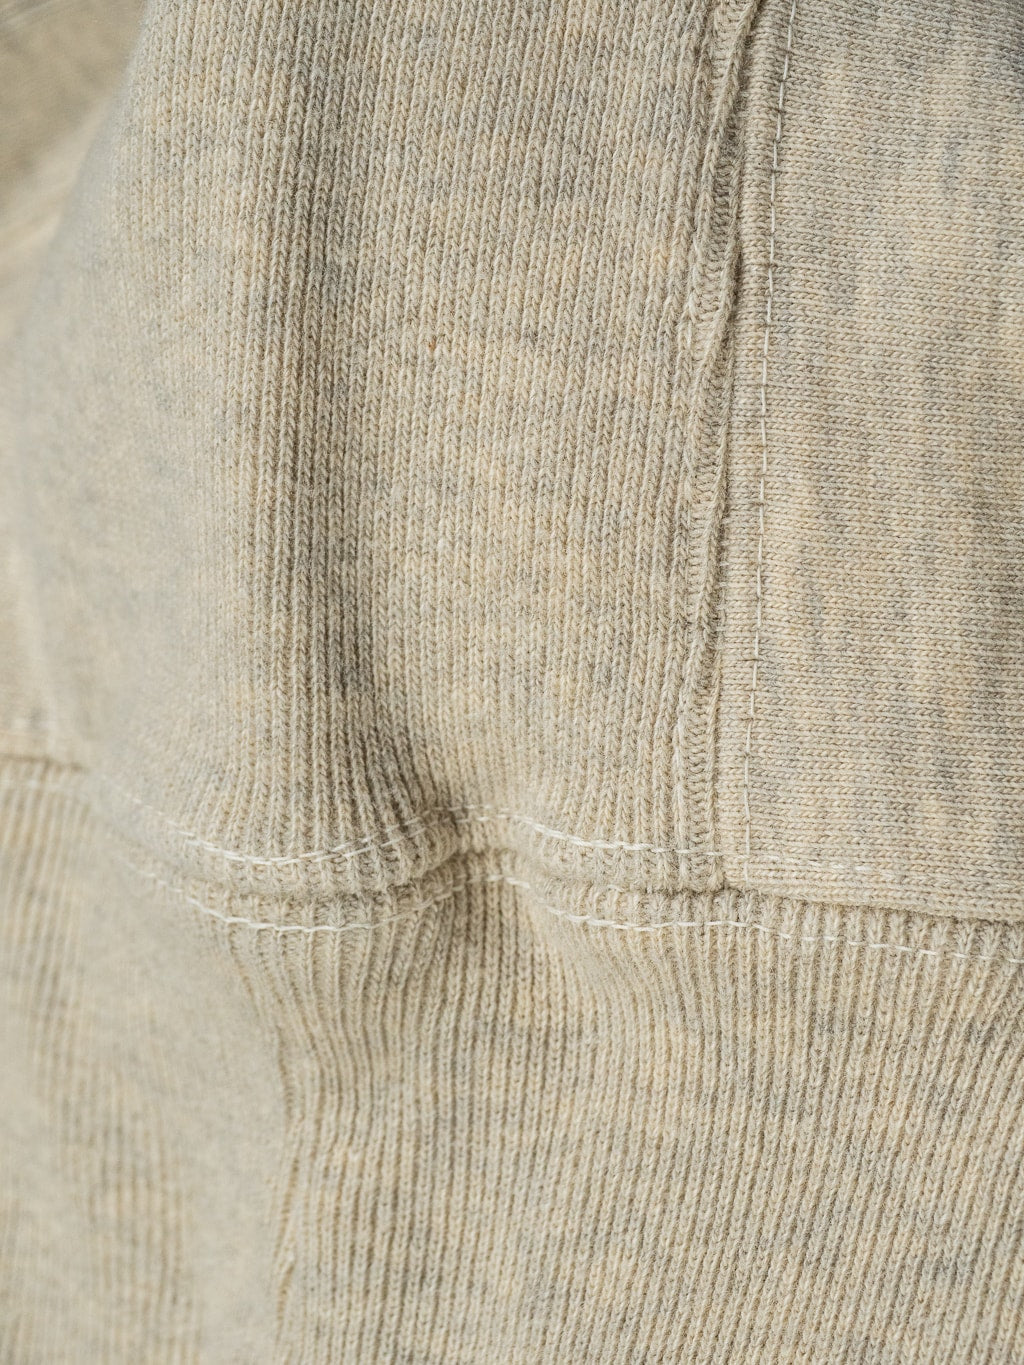 UES Puca Purcara Loopwheeled Sweatshirt oatmeal heavywight fabric closeup